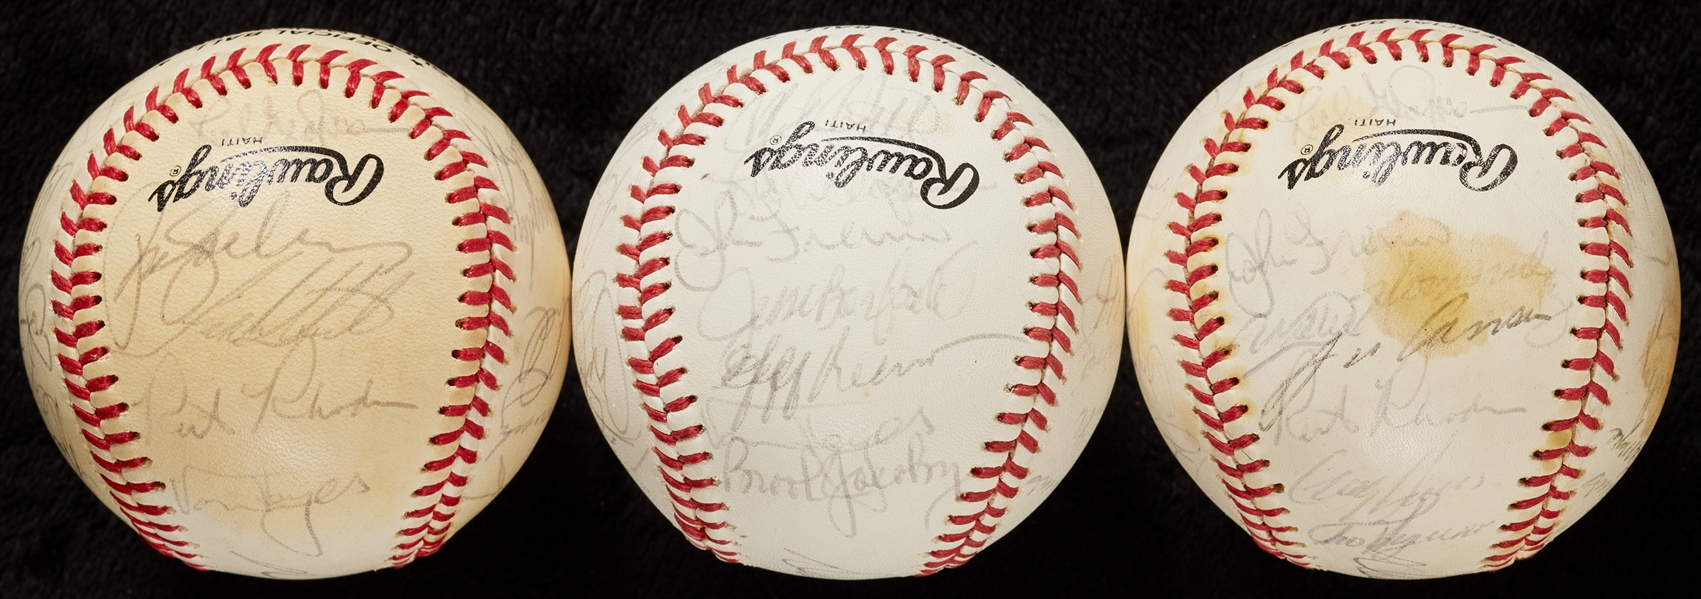 1986 Super Major Series '86 Multi-Signed Baseballs (3)